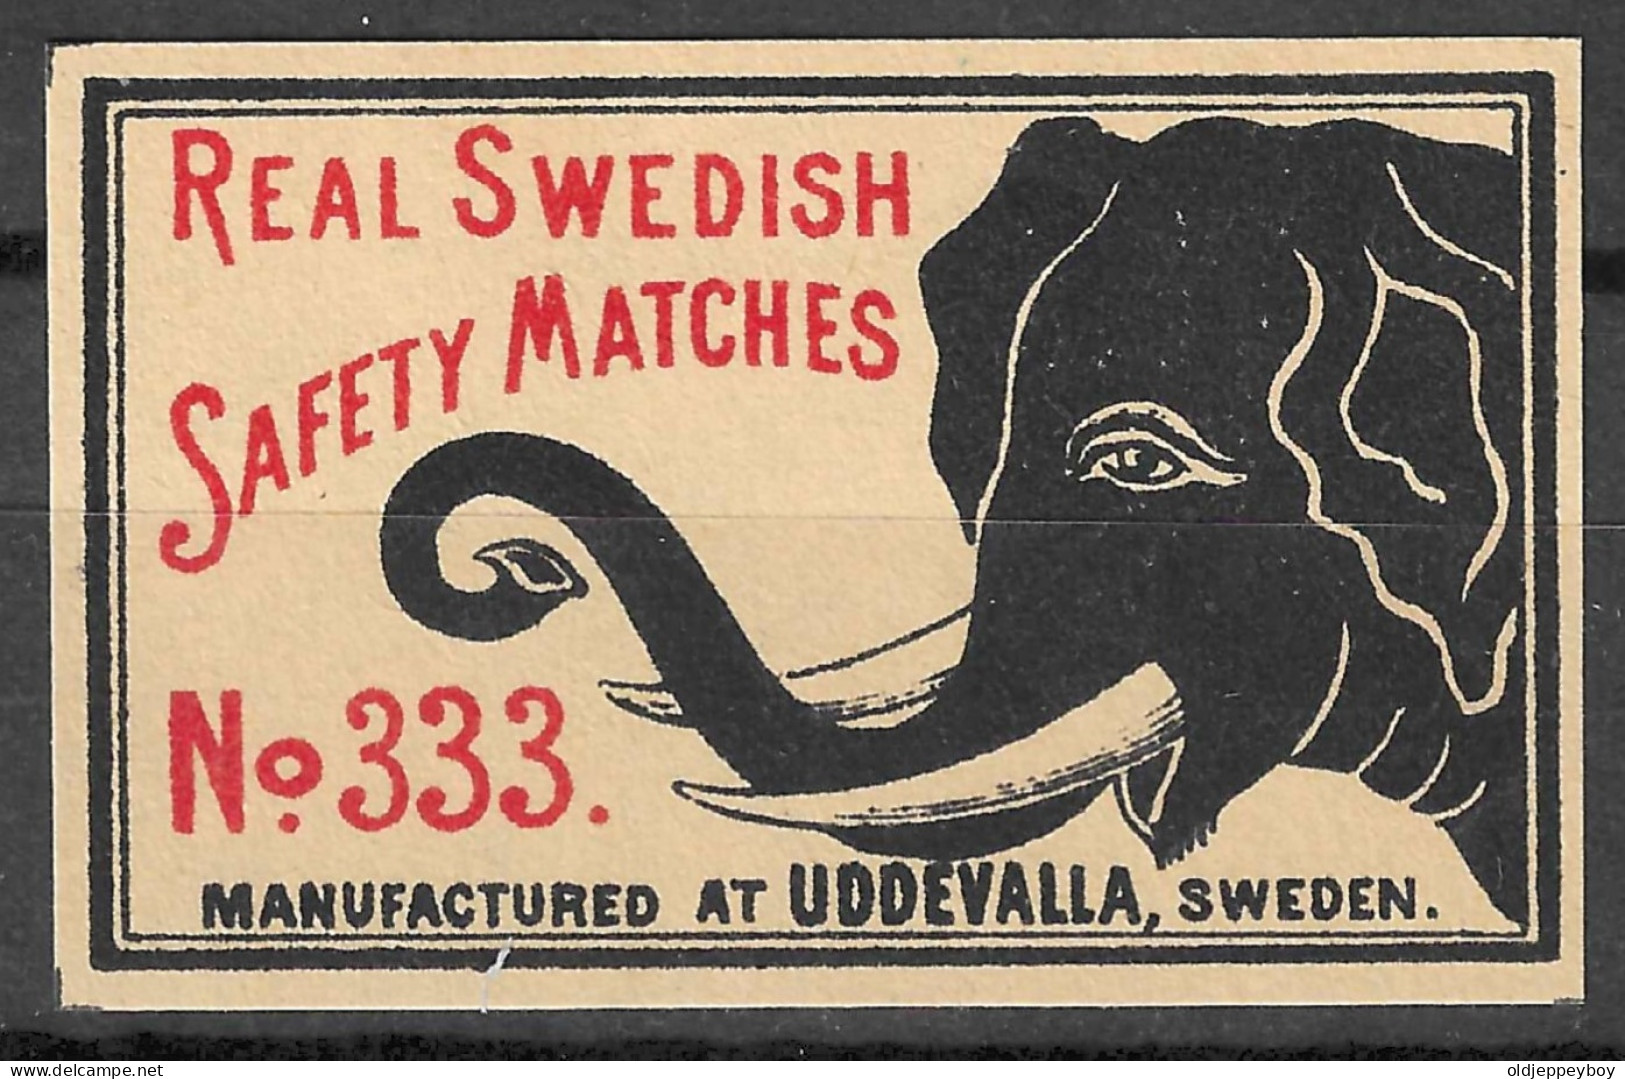 MADE IN SWEDEN UDDEVALLE VINTAGE Phillumeny MATCHBOX LABEL REAL SWEDISH SAFETY MATCHES Nº333  5.5  X 3.5 CM  RARE - Matchbox Labels